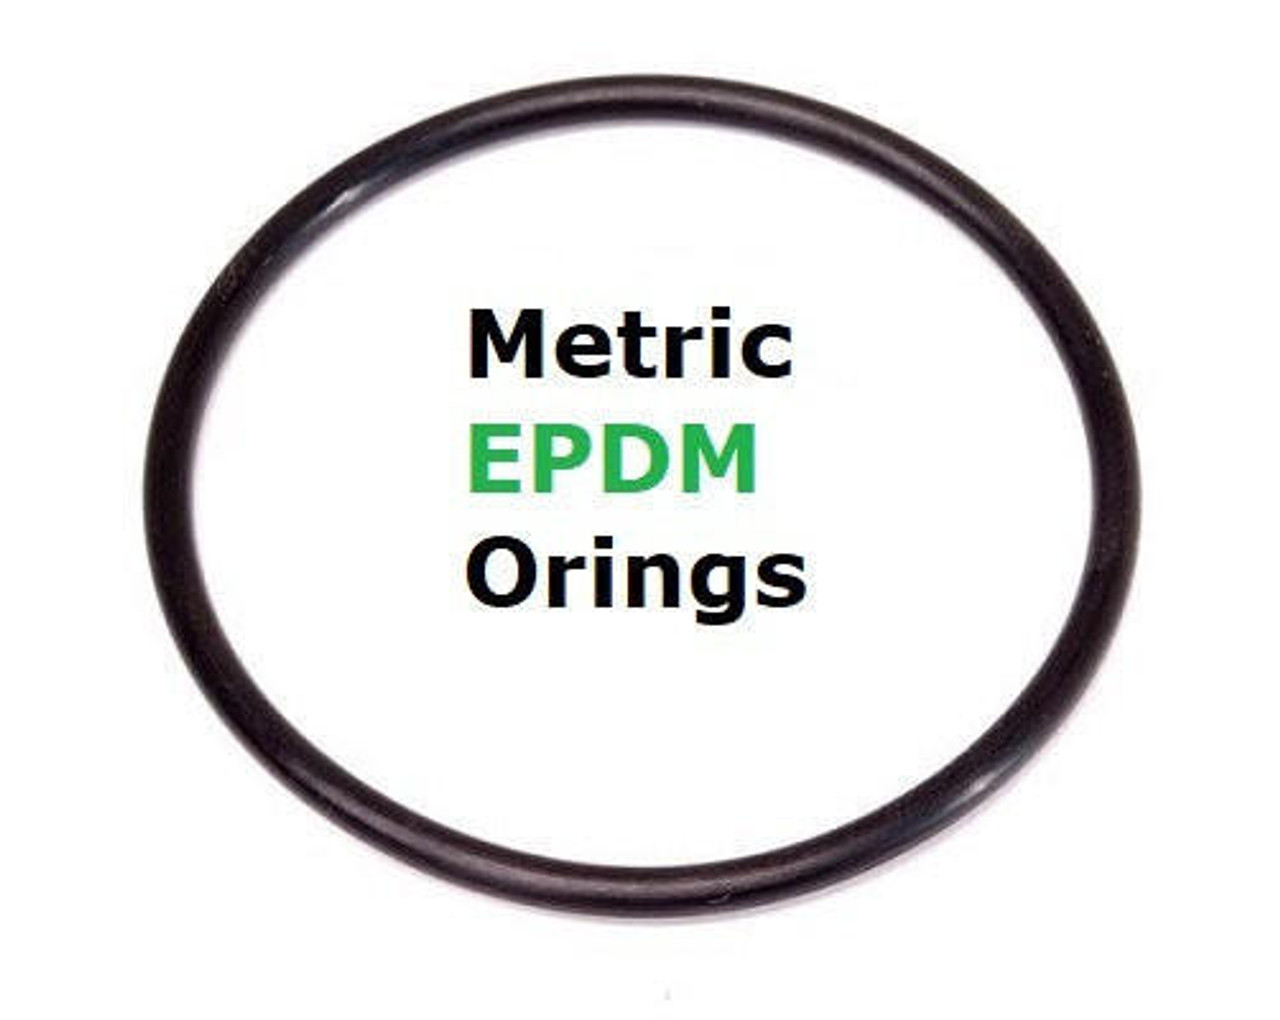 Metric EPDM 70  Orings  3 x 1mm  Minimum 10 pcs